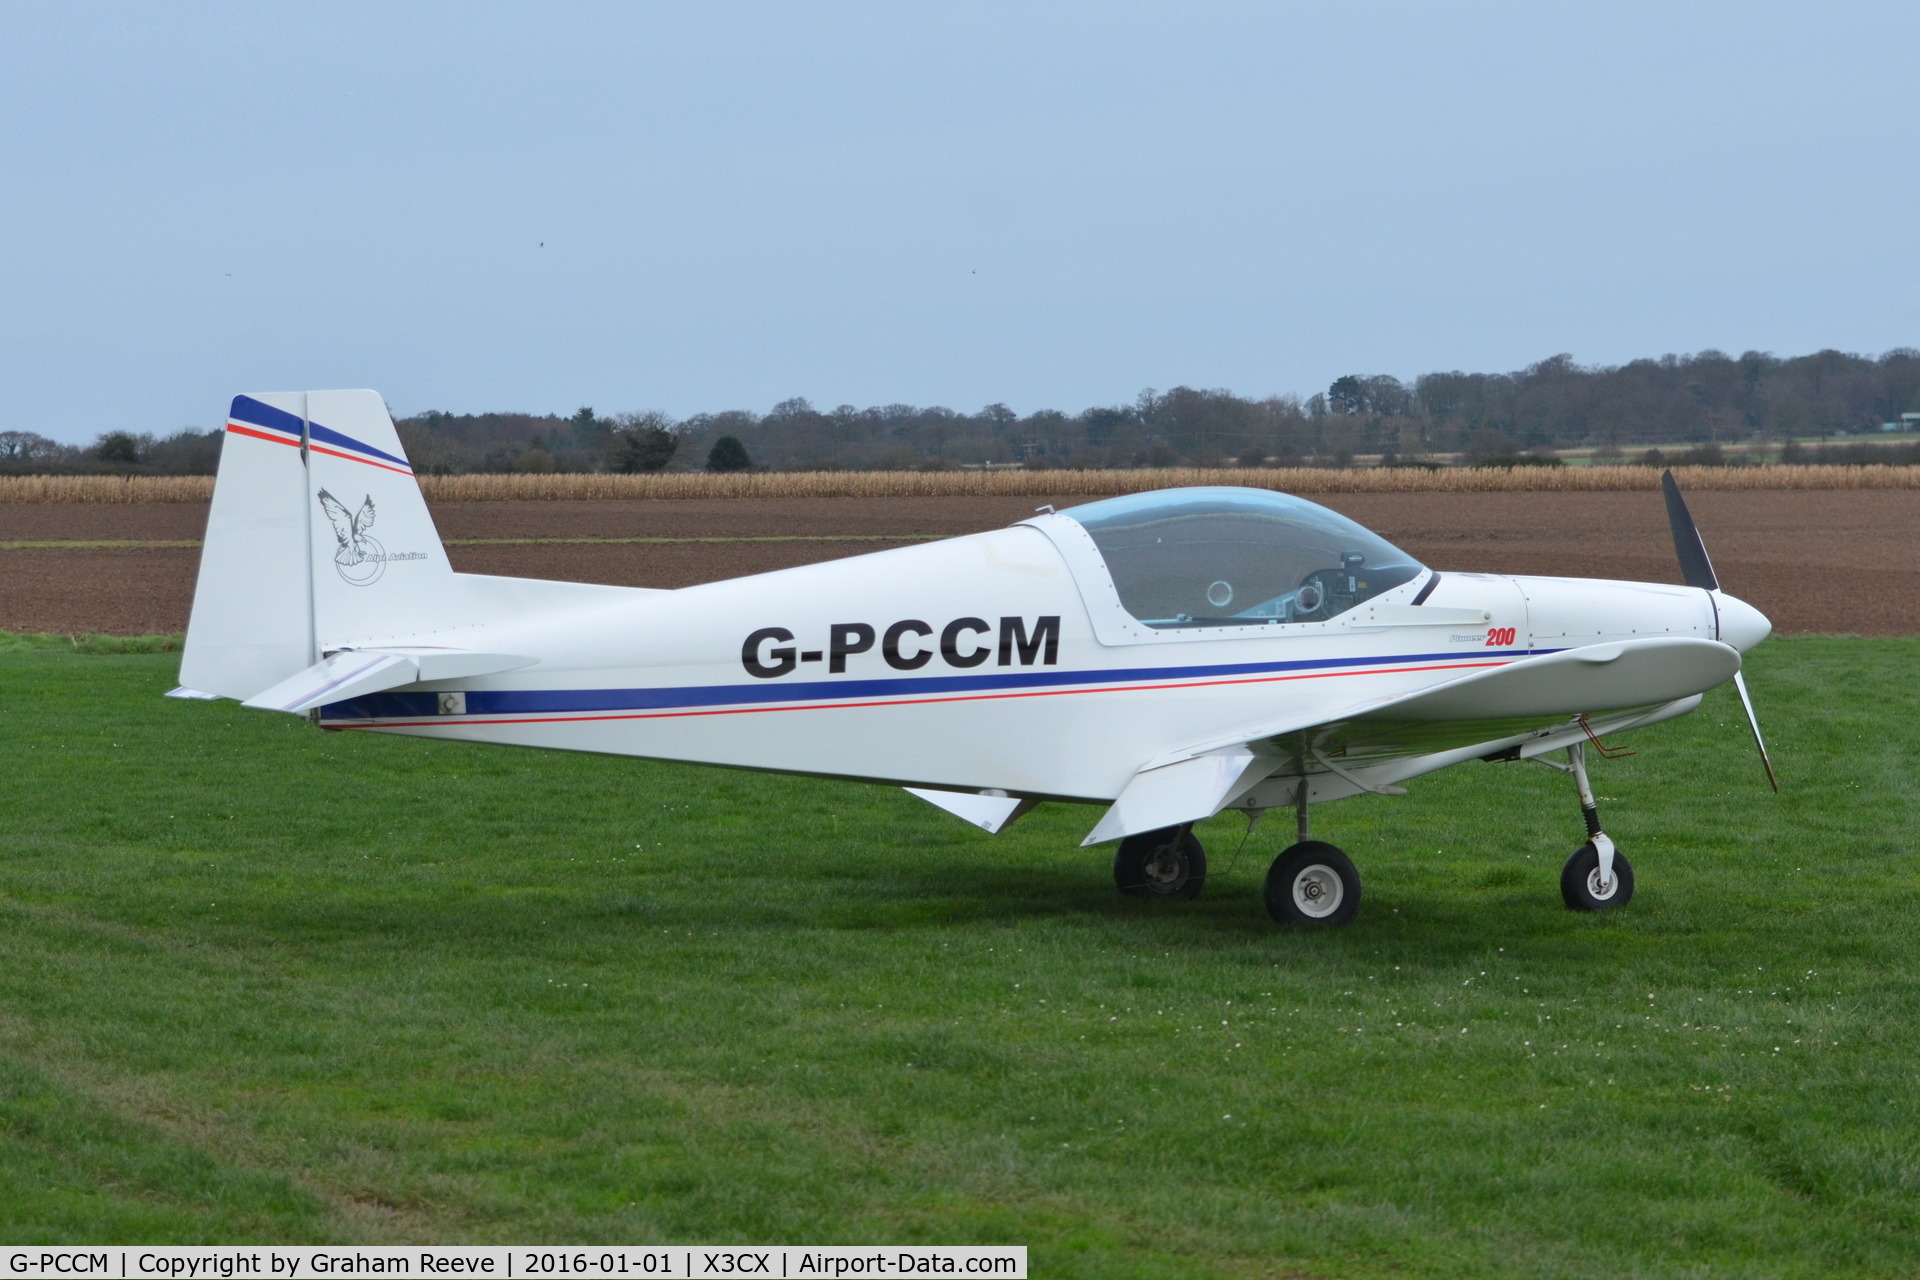 G-PCCM, 2014 Alpi Aviation Pioneer 200-M C/N LAA 334-15250, Parked at Northrepps.